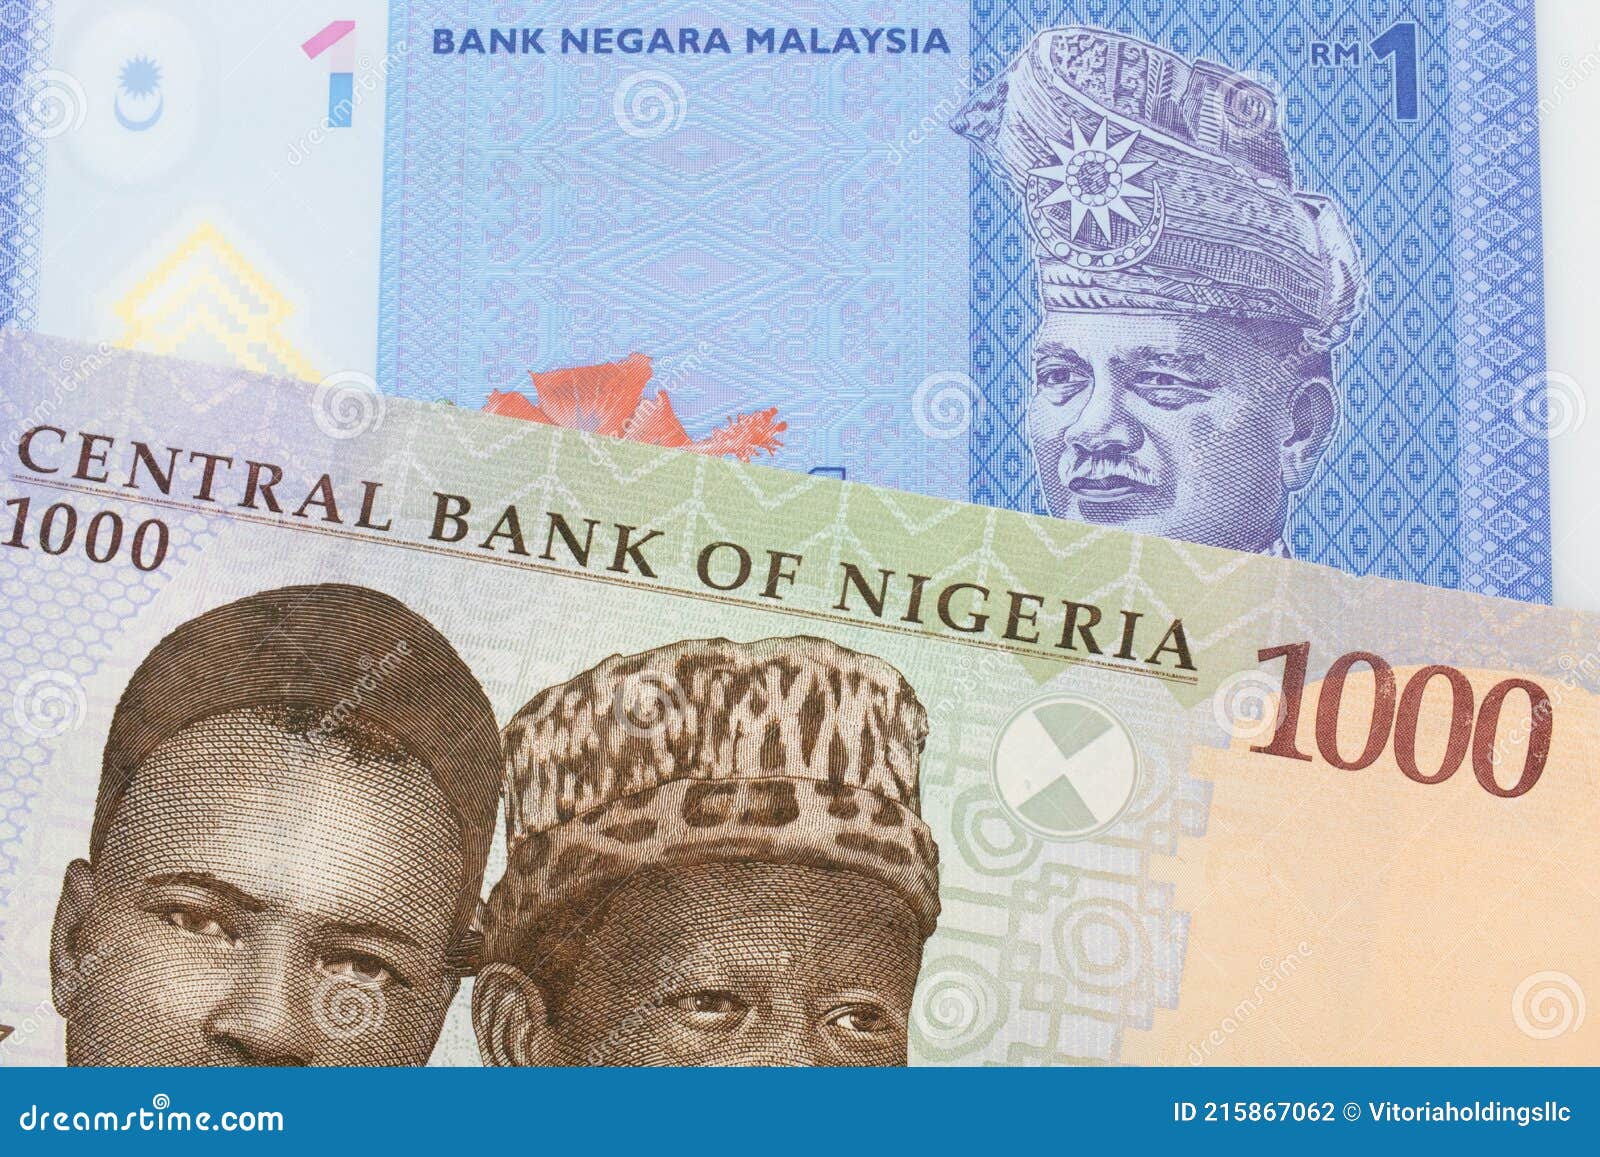 Malaysia currency to naira: BusinessHAB.com